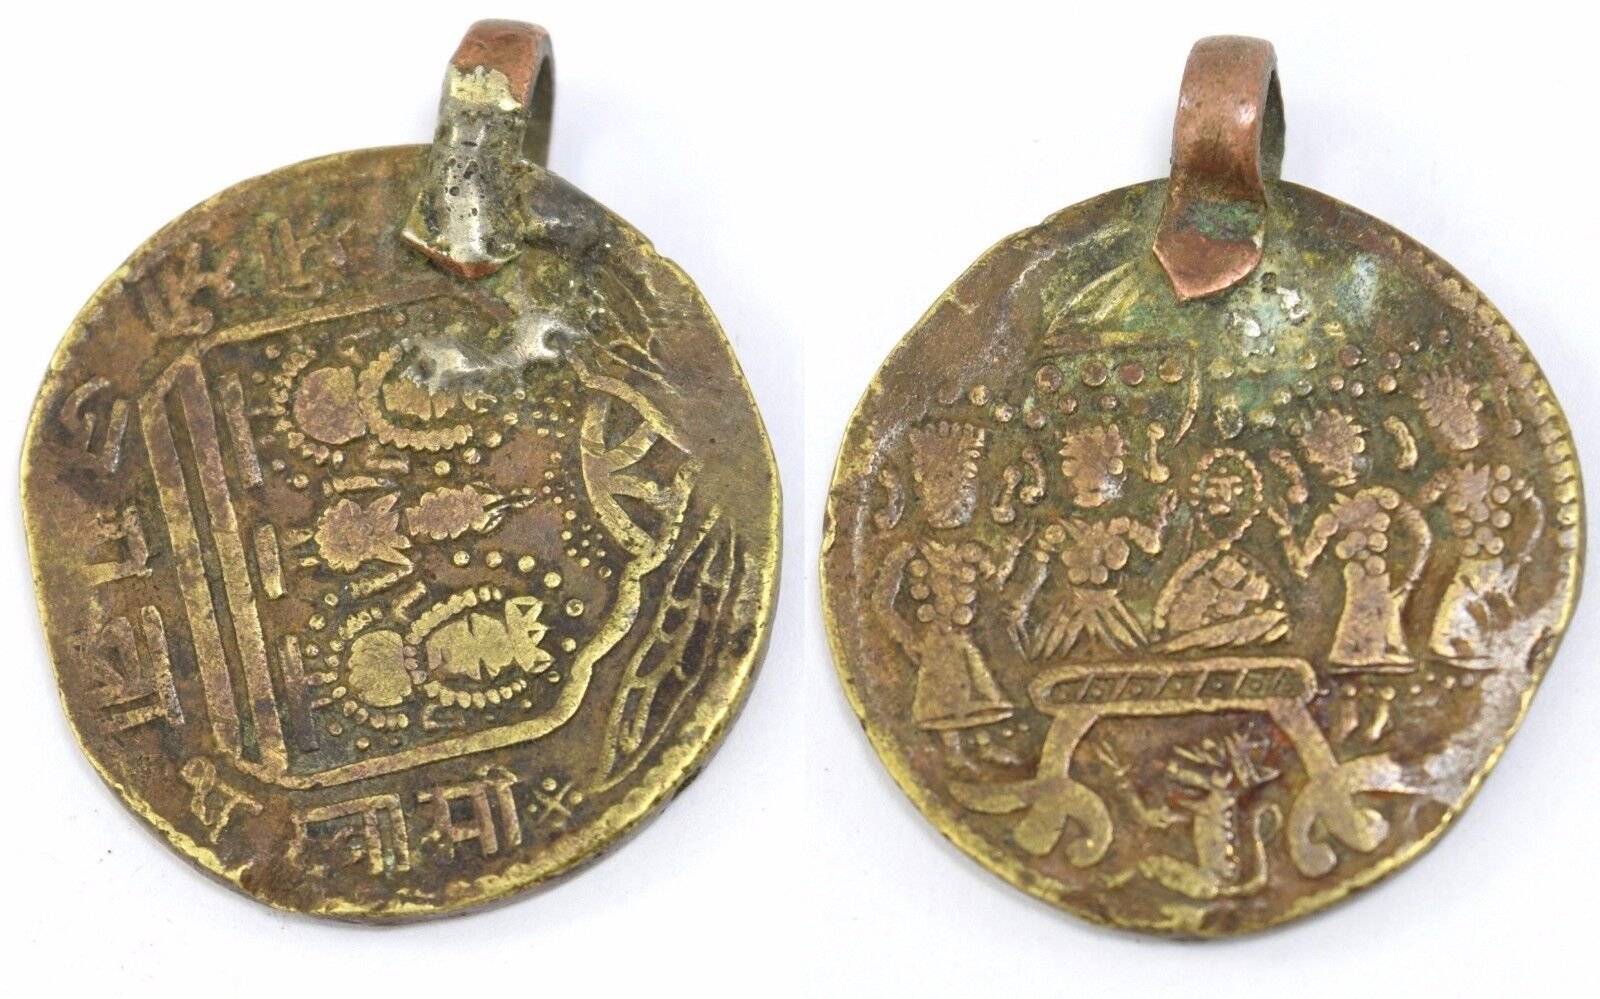 Rare vintage temple token Old collectible ram token amulet pendant. G29-67 